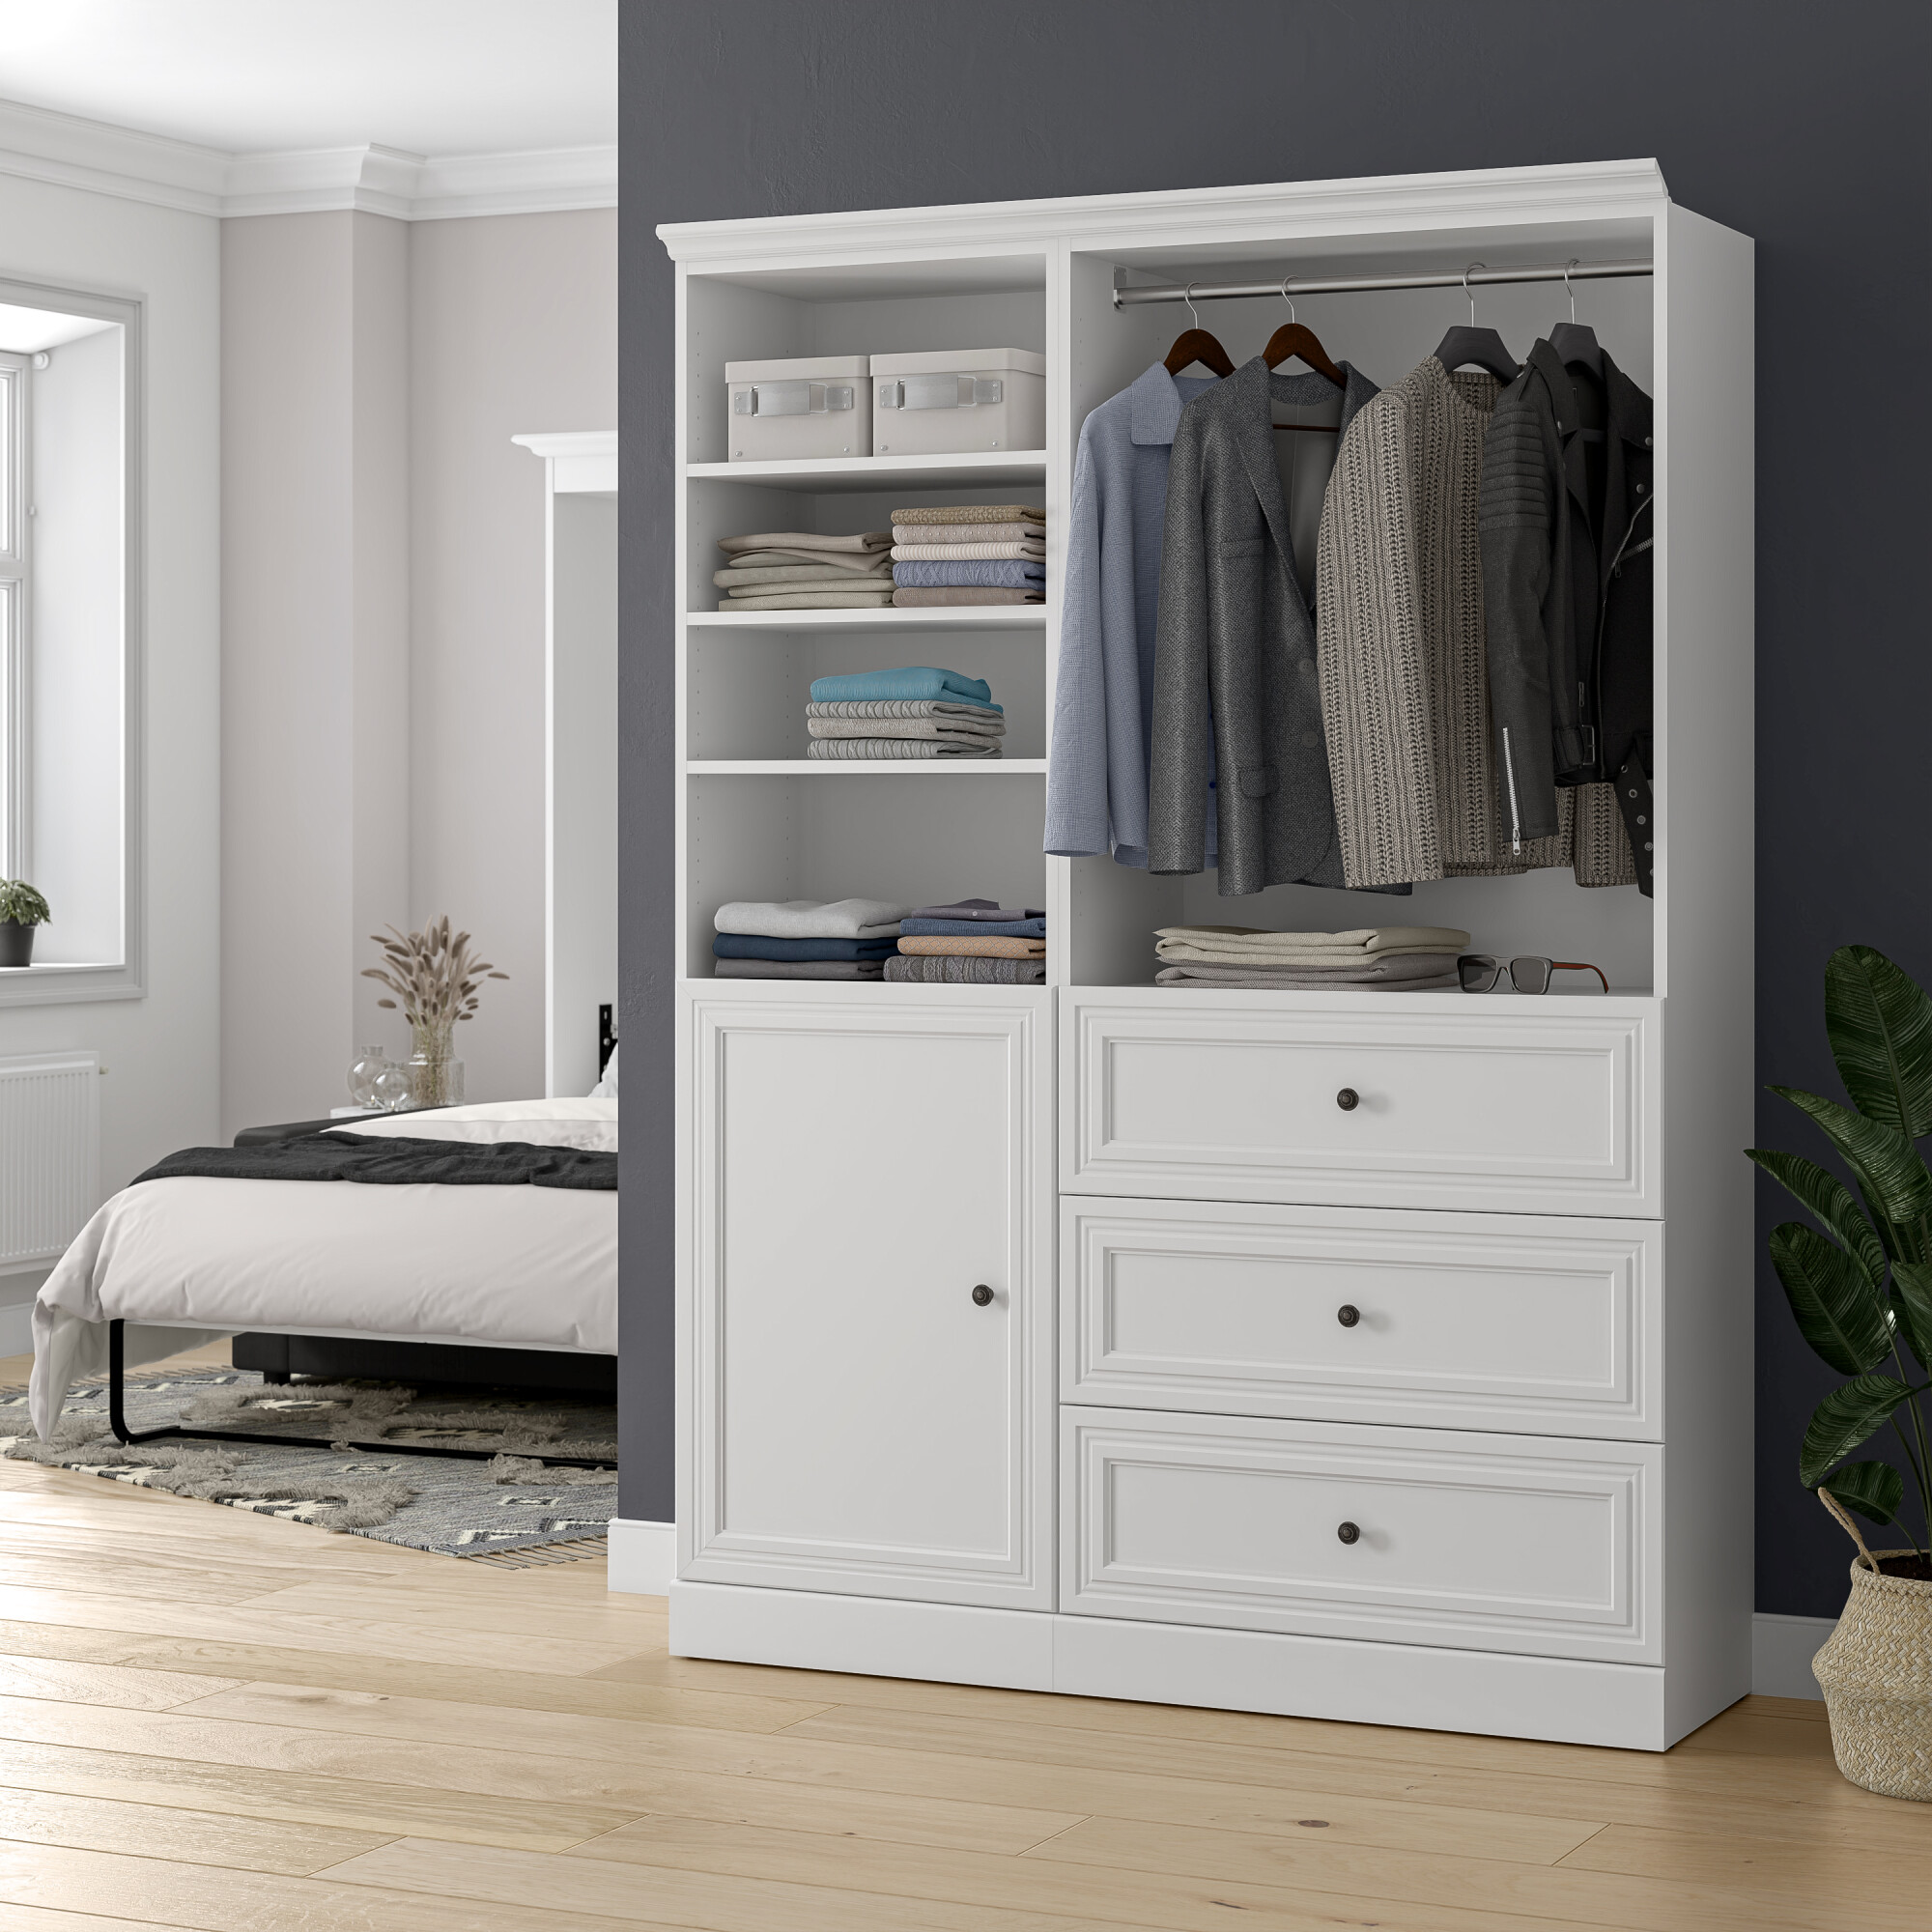 https://www.homethreads.com/files/bestar/40874-17-bestar-versatile-61r-closet-organizer-with-drawers-and-door-in-white-6.jpg